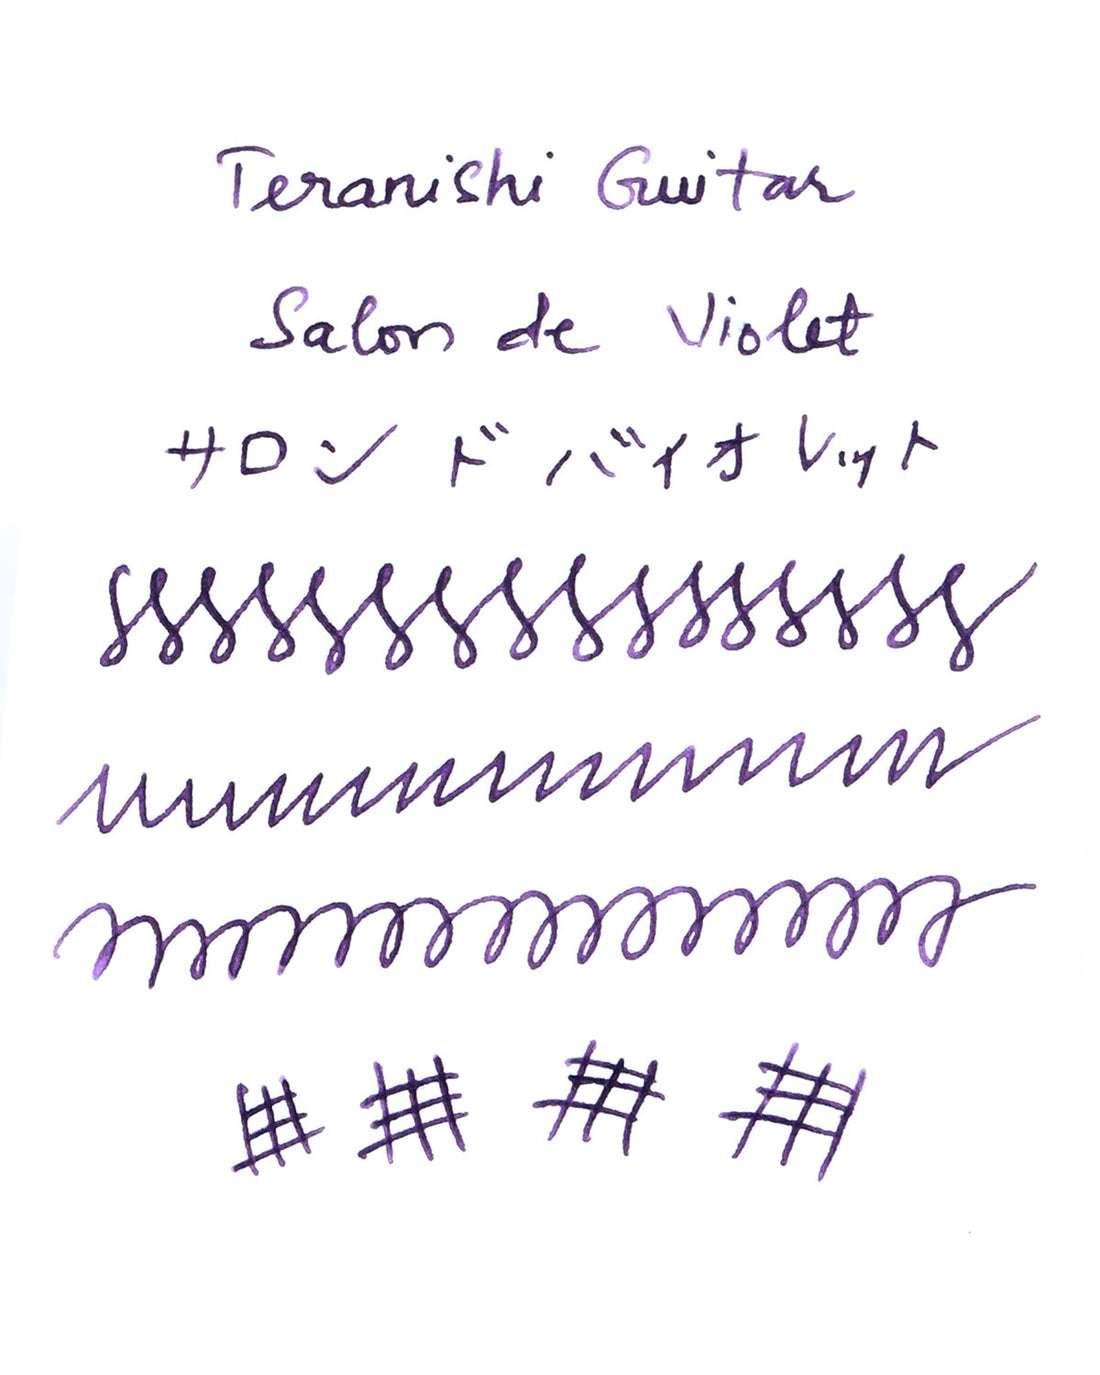 Teranishi Guitar - Taisho Roman ink - Salon de Violet - Wancherpen International